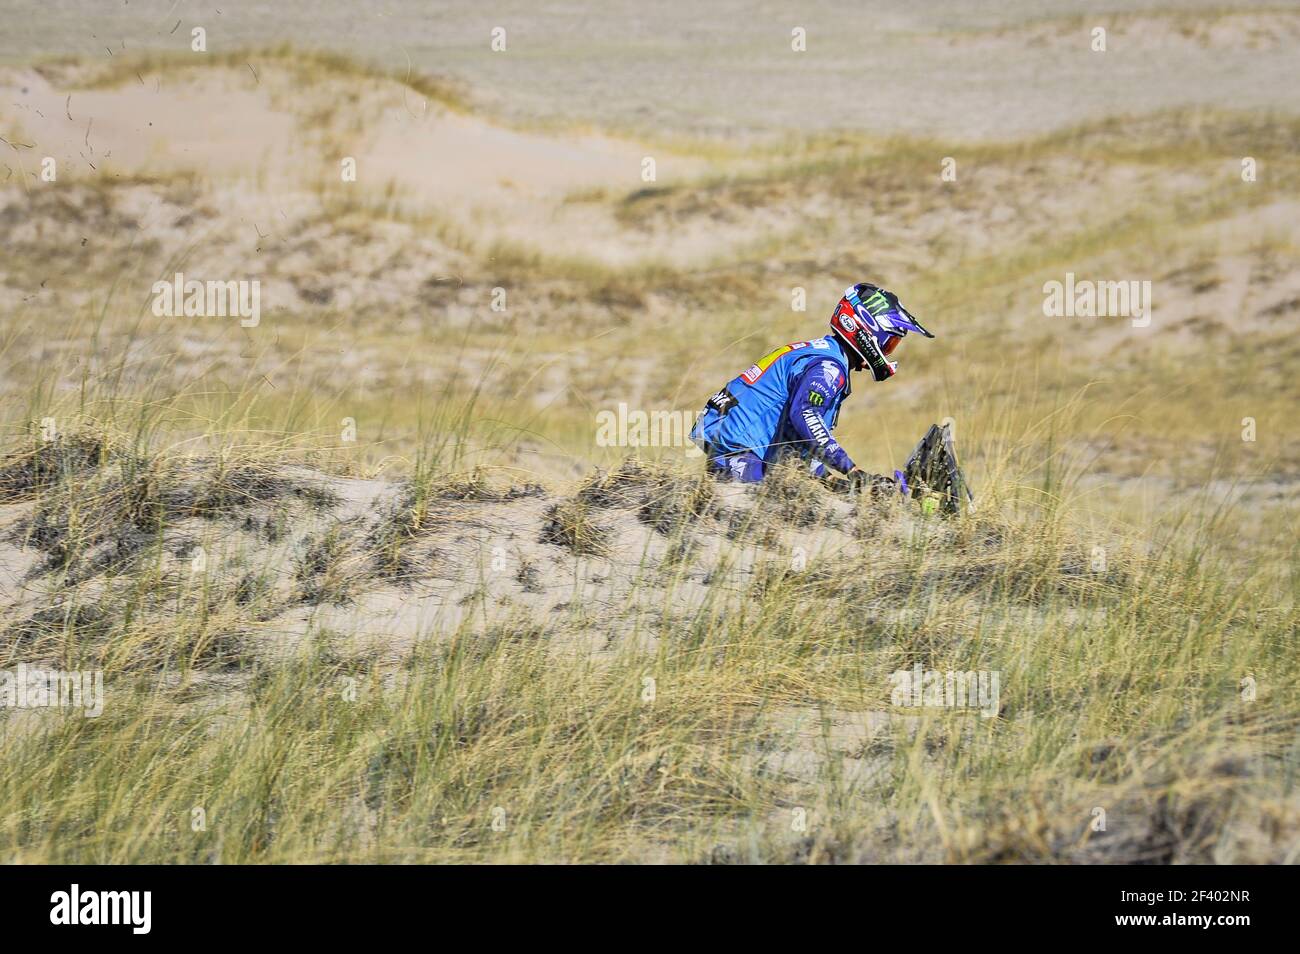 04 VAN BEVEREN ADRIEN (FRA), YAMAHA, Moto, Fahrrad, Aktion während der Dakar 2018, Etappe 10 Salta nach Belen, Argentinien, januar 16 - Foto DPPI Stockfoto